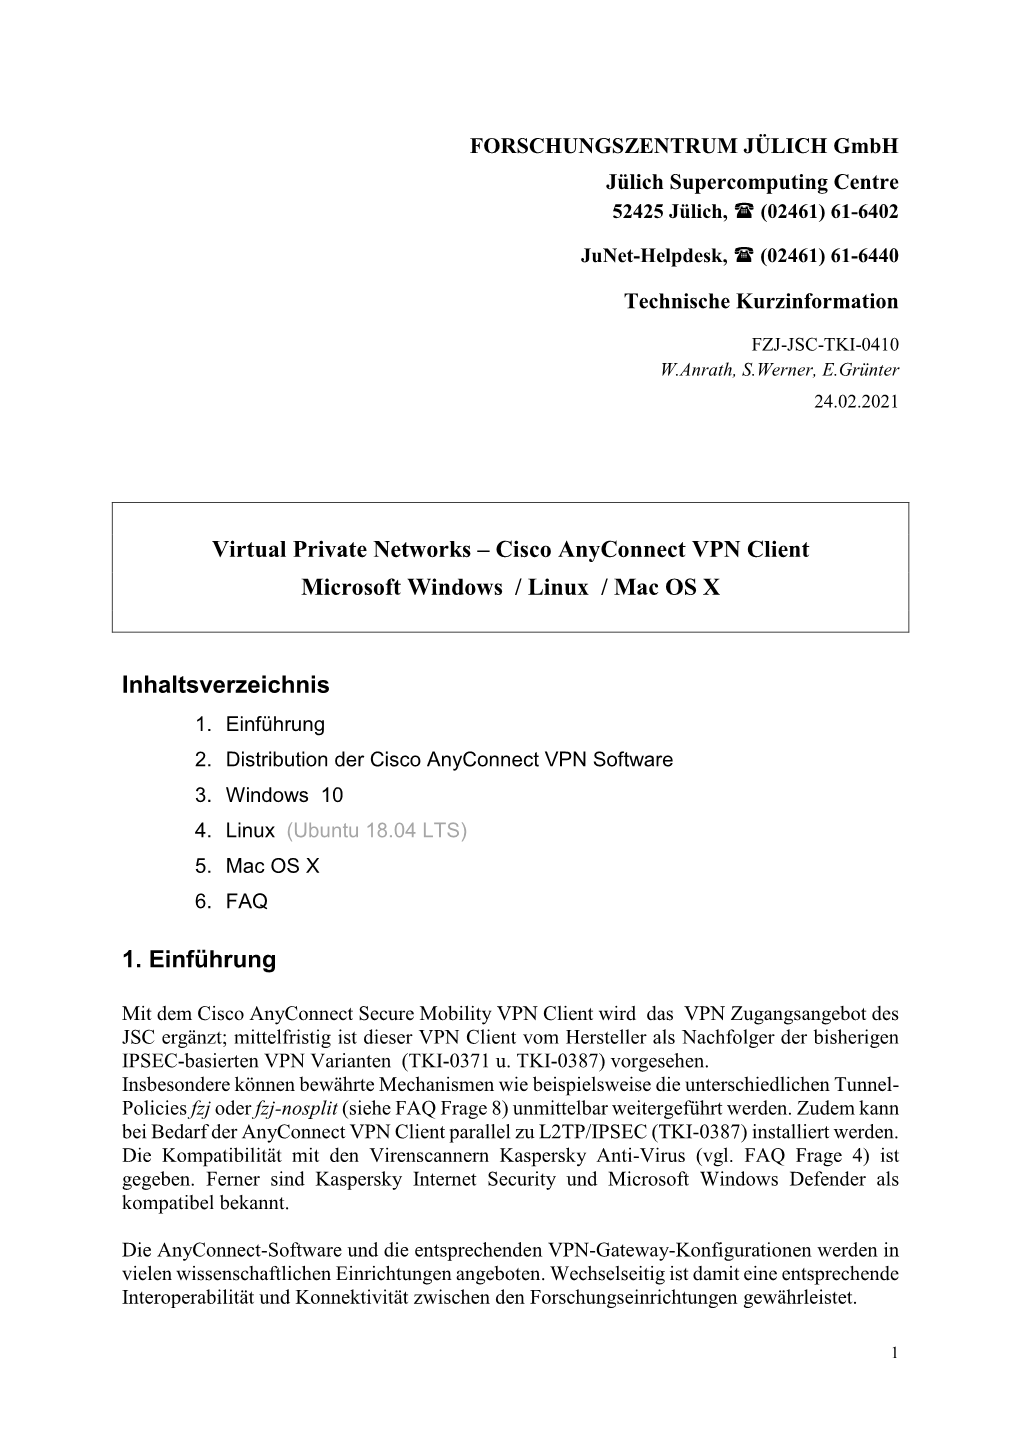 Cisco Anyconnect VPN Client, Microsoft Windows / Linux / Mac OS X